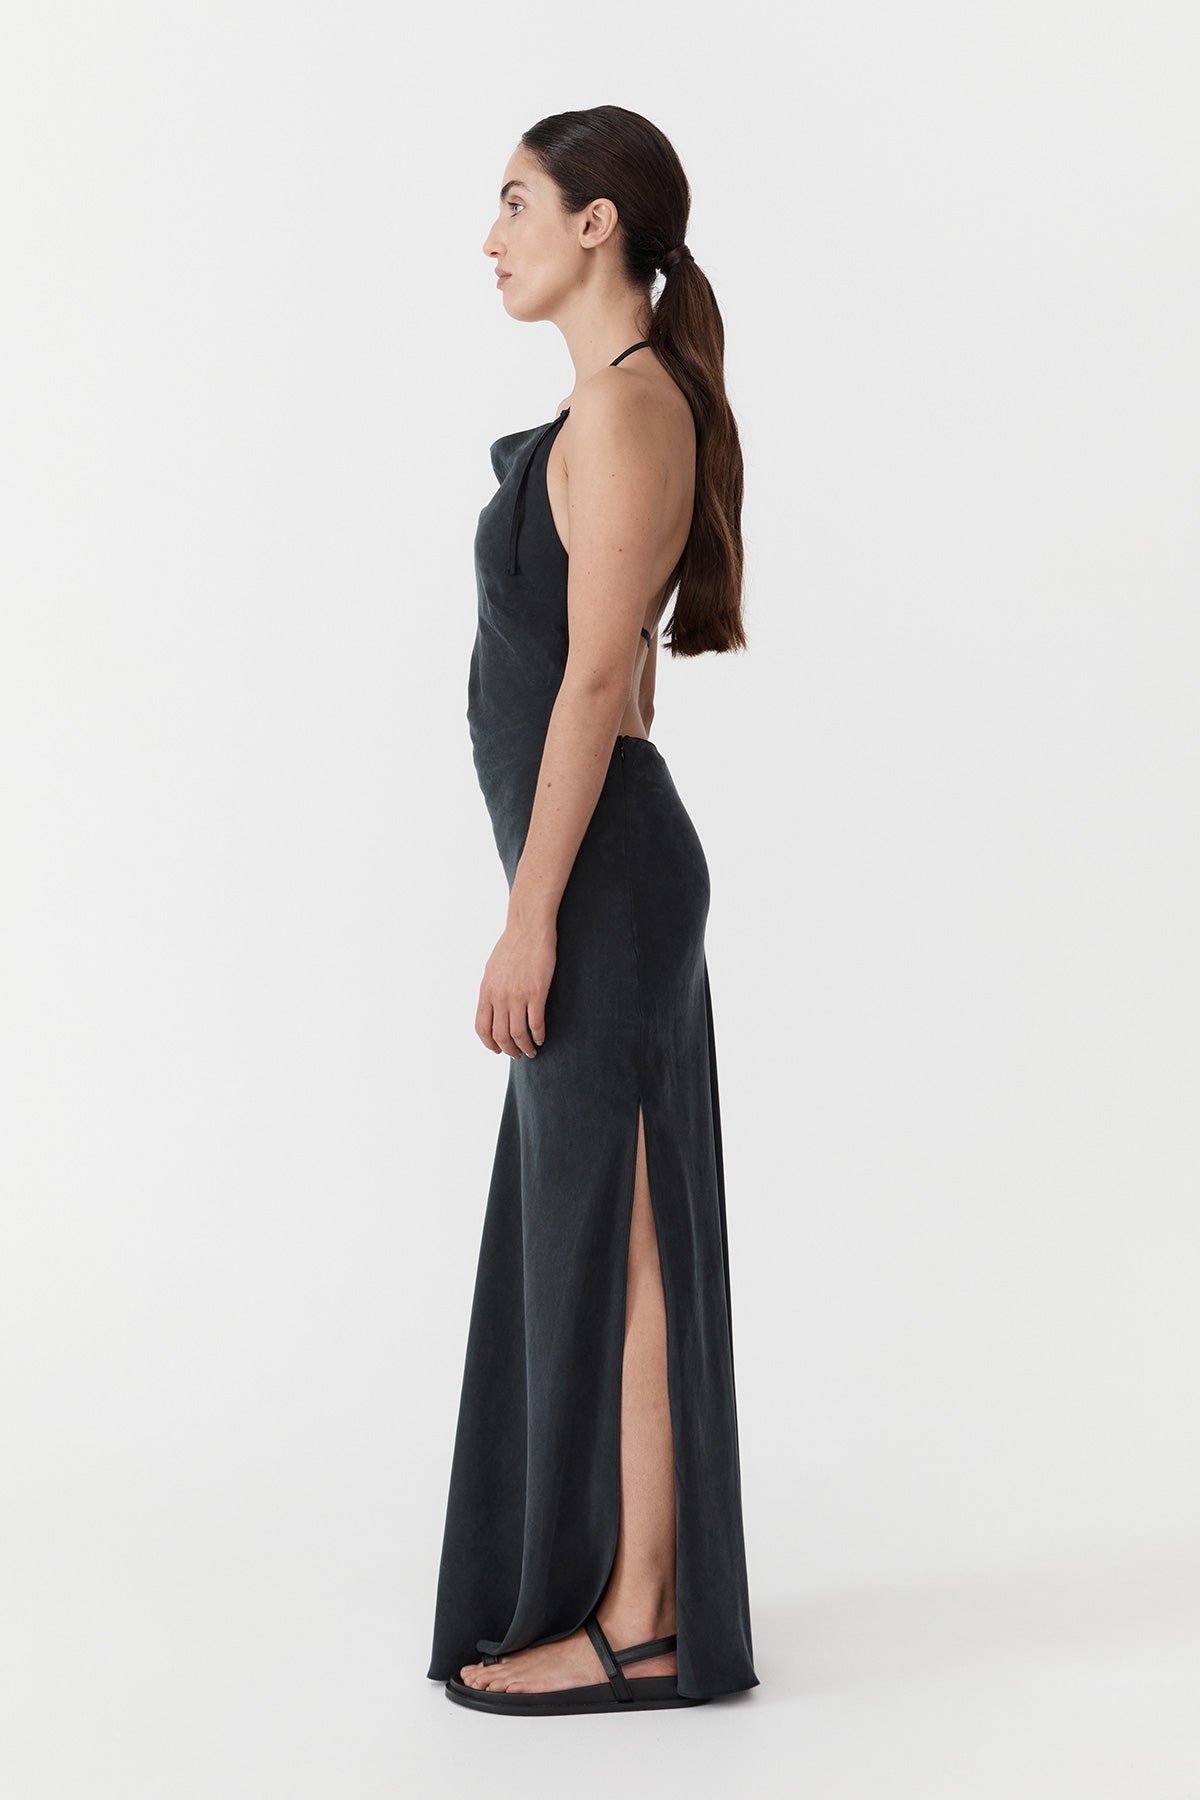 St. Agni | Adjustable Strap Dress - Black